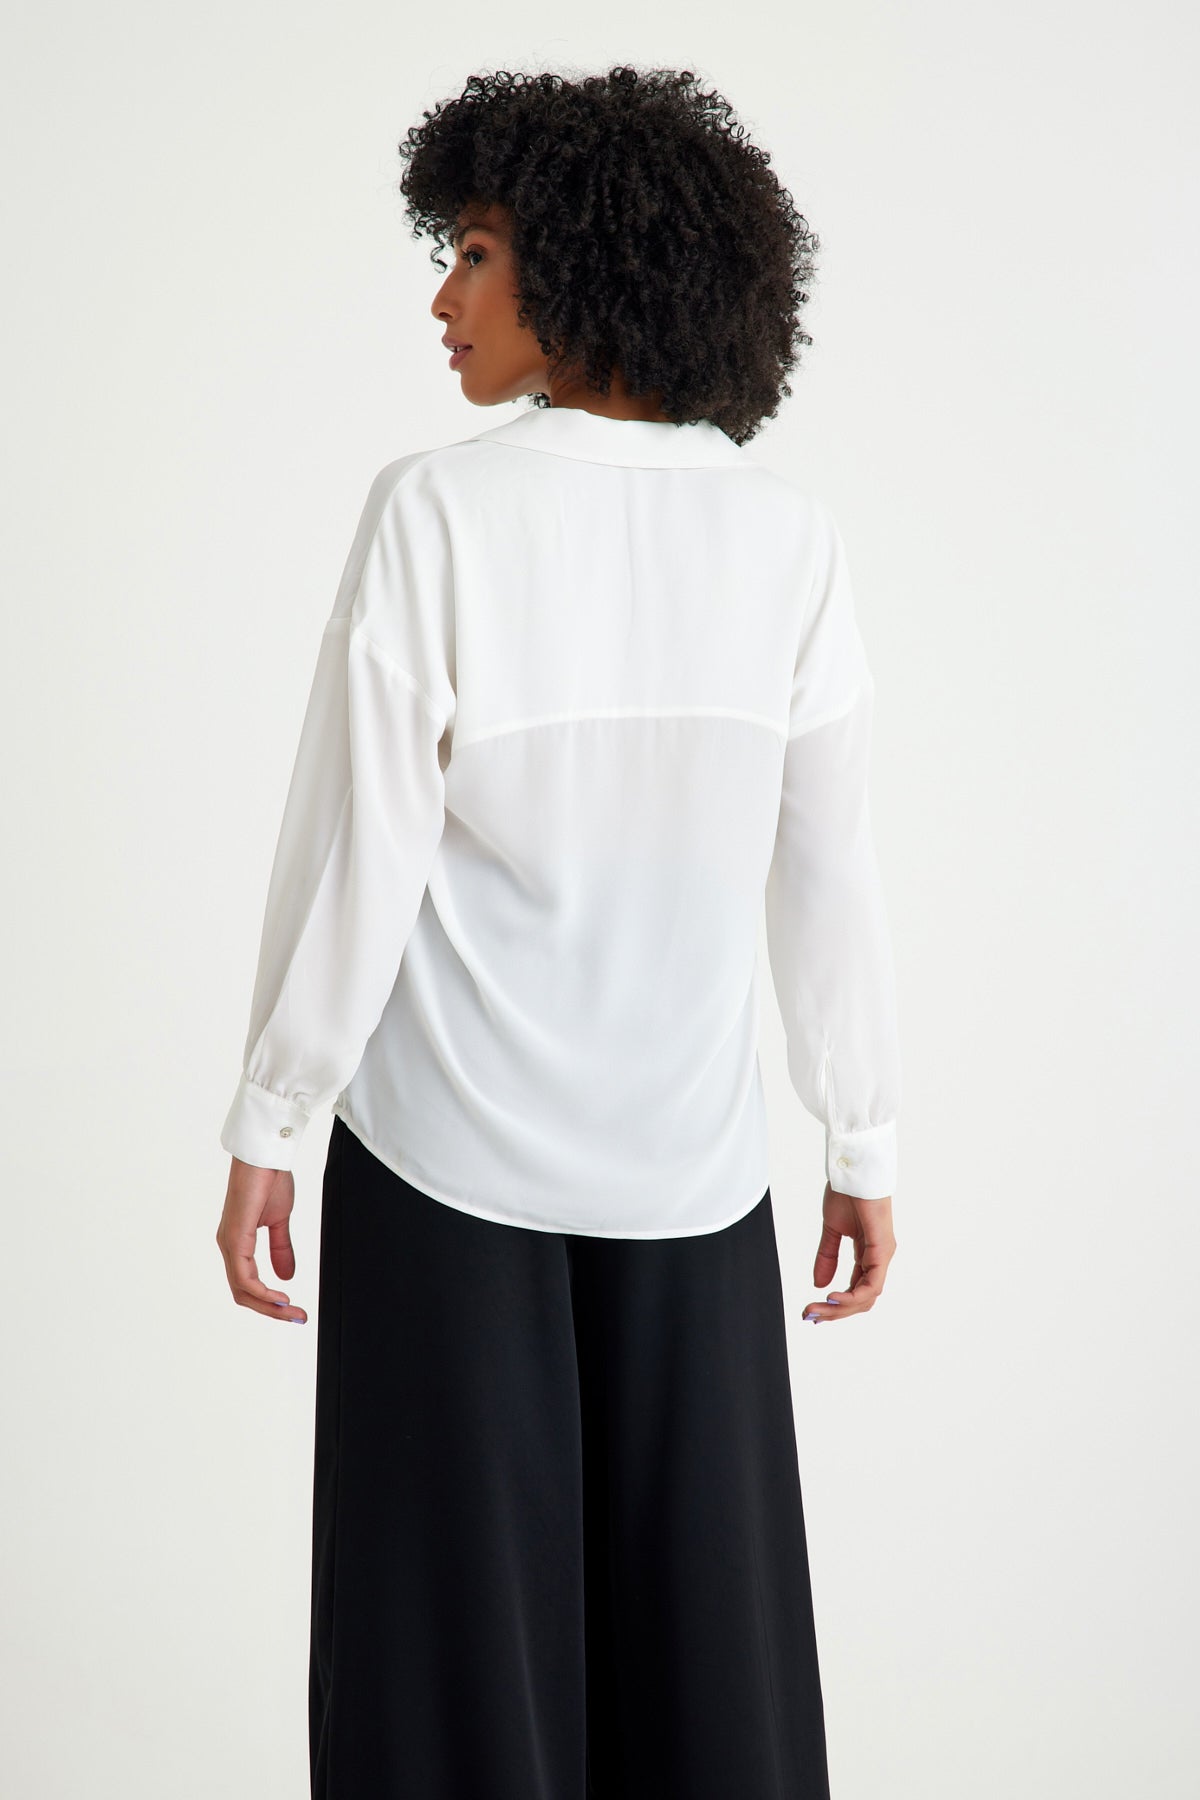 White Lapel Collar Cuffed Women's Shirt